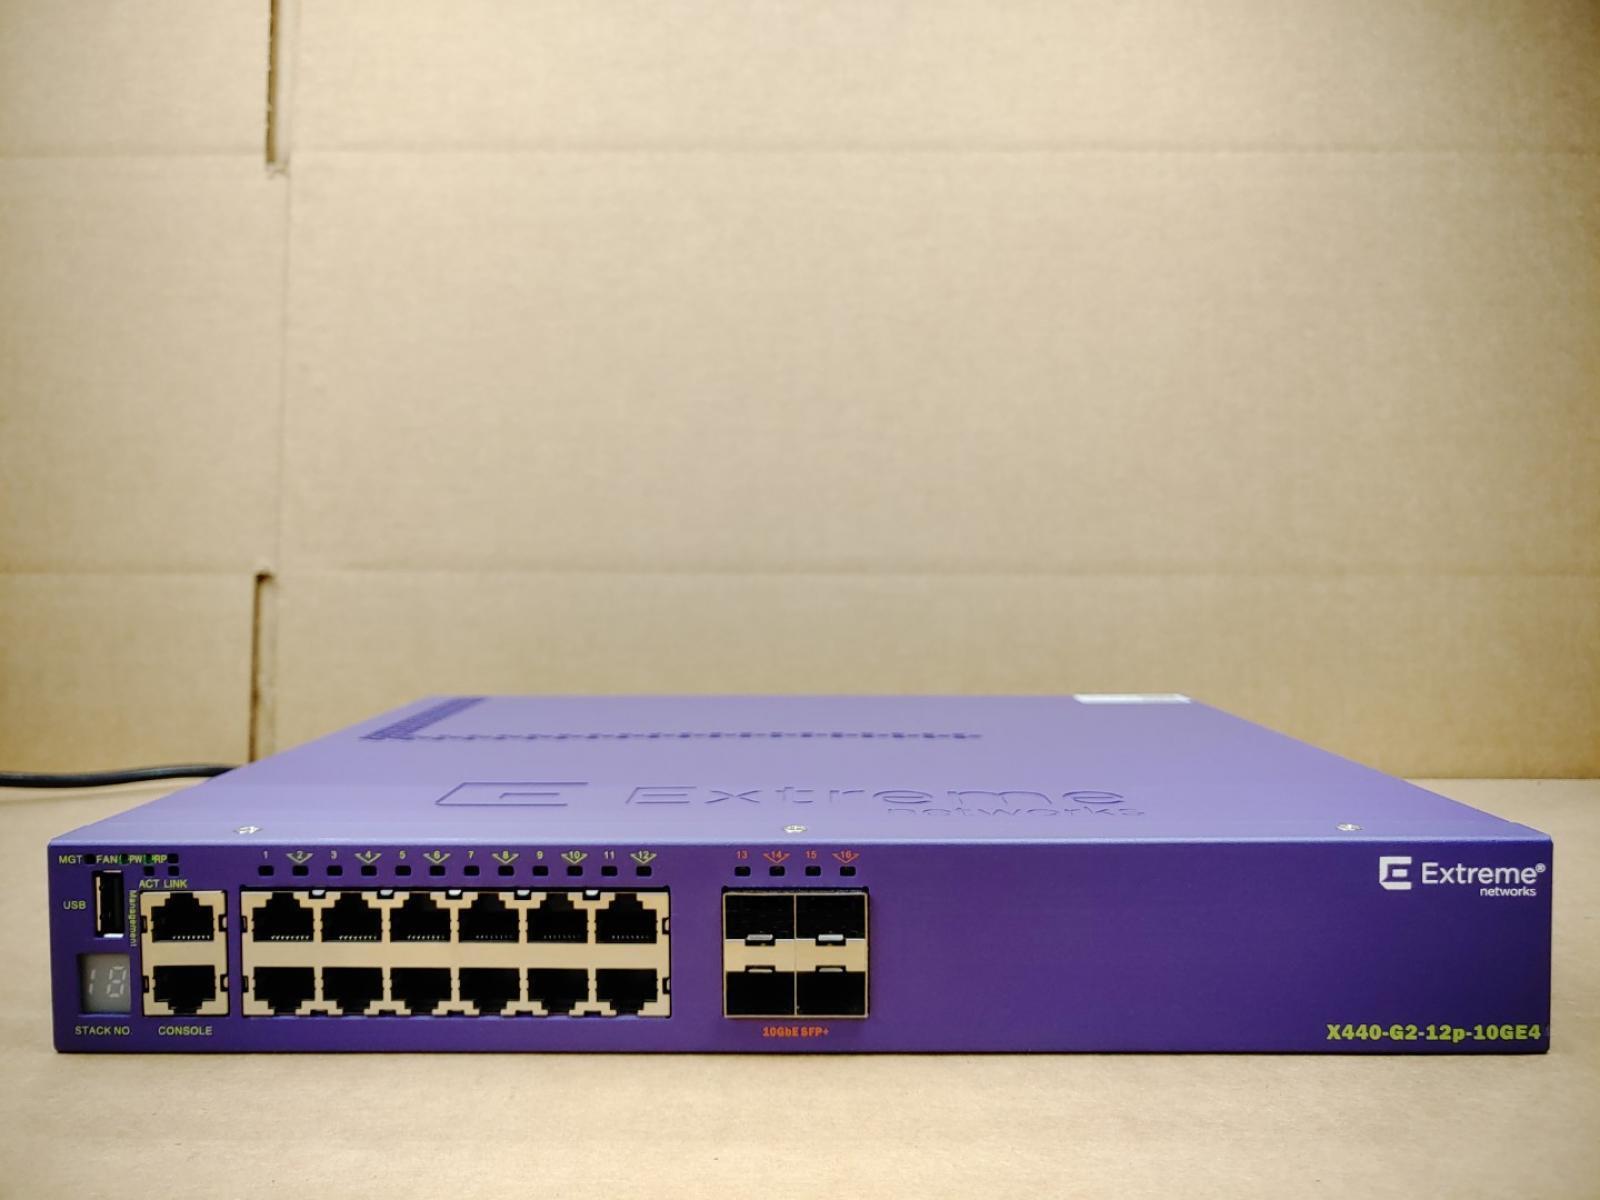 Extreme Networks X440-G2-12p-10GE4 12-Port Gigabit PoE Ethernet Switch ✔✔✔✔